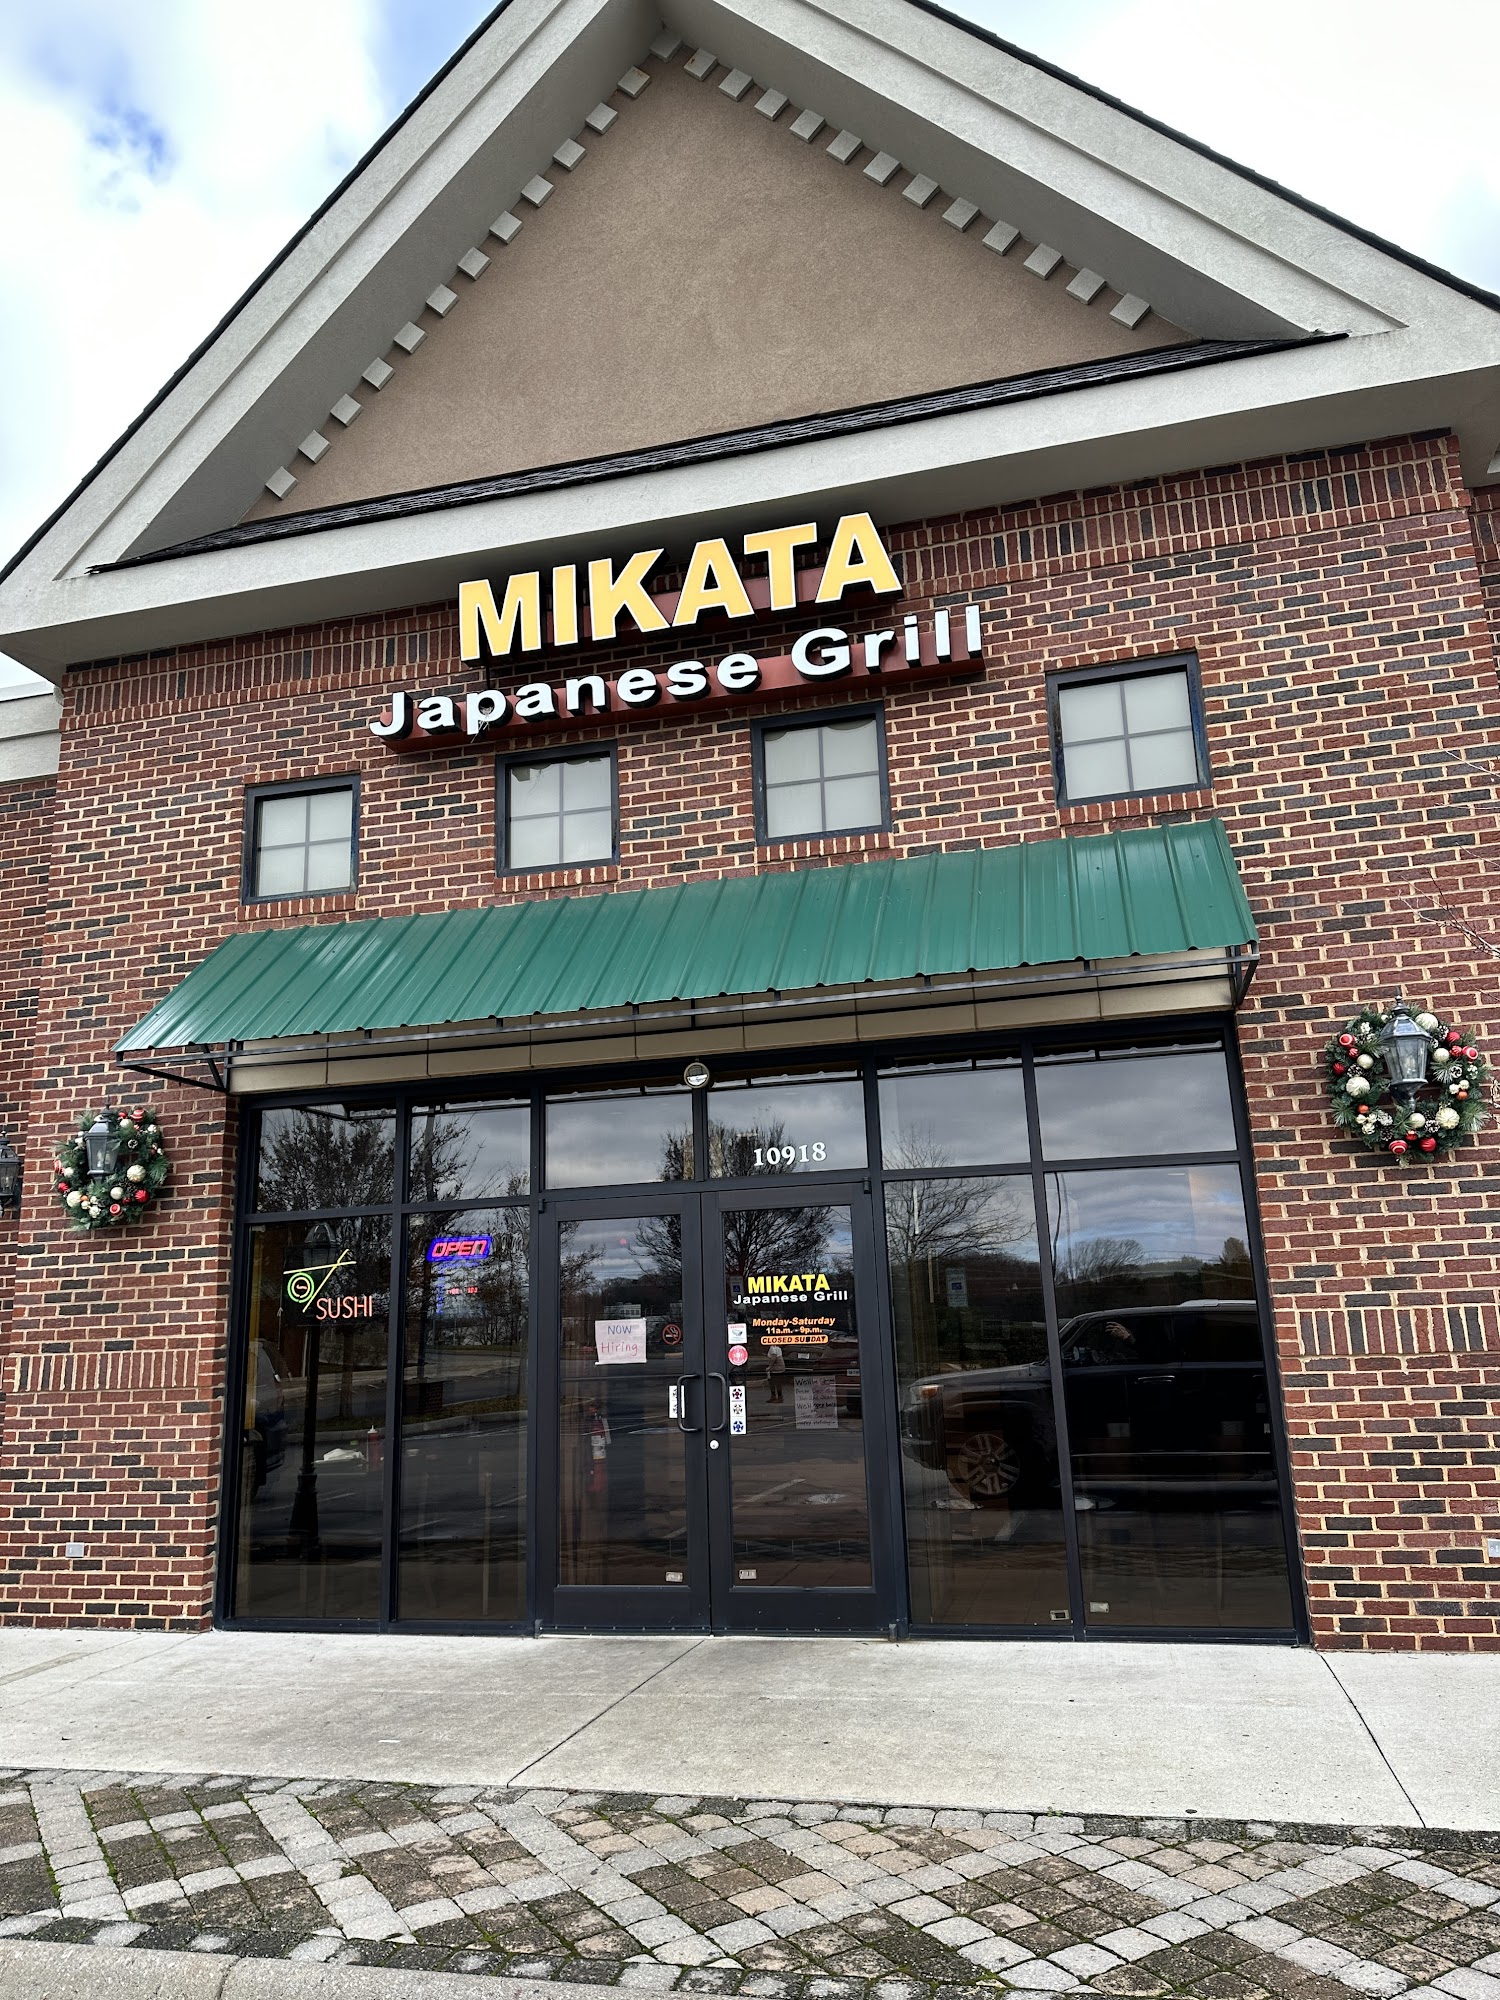 Mikata Japanese Grill & Sushi